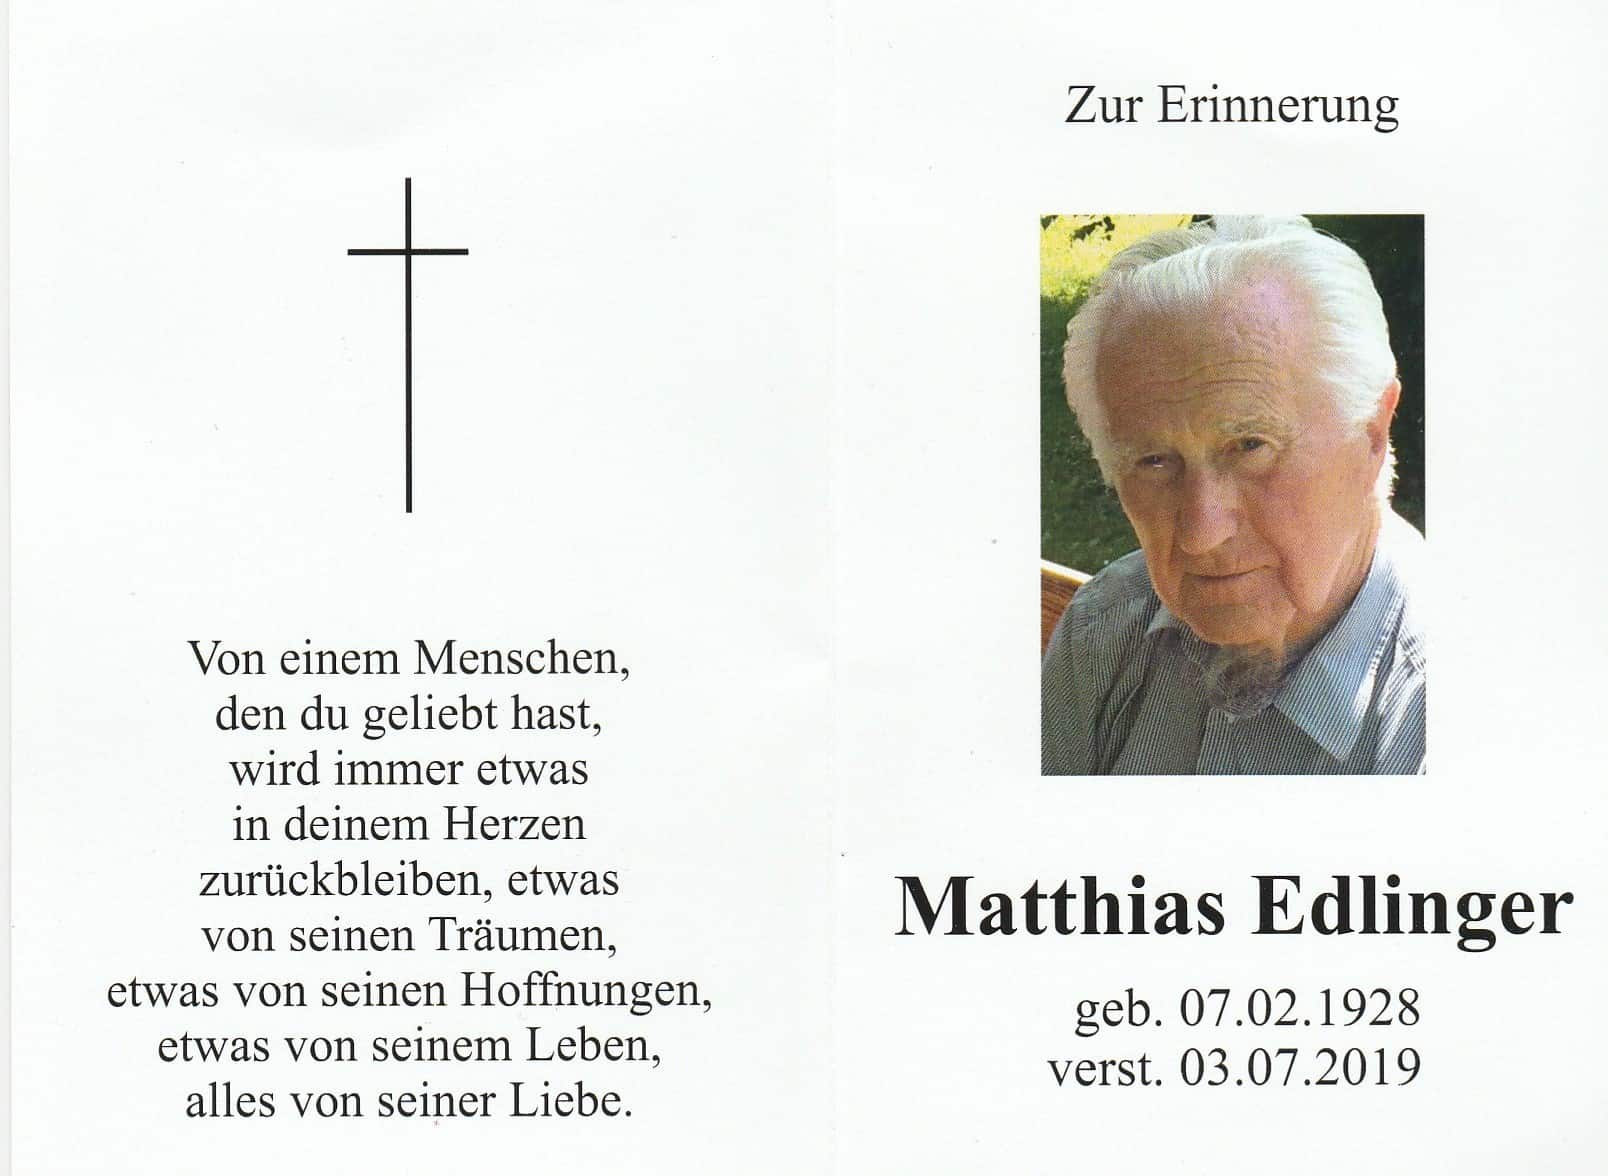 OSR Matthias Edlinger †<br /><h3 style='font-size: 16px; line-height: 16px !important; margin-top: 5px;'><span style='color: #800000;'>